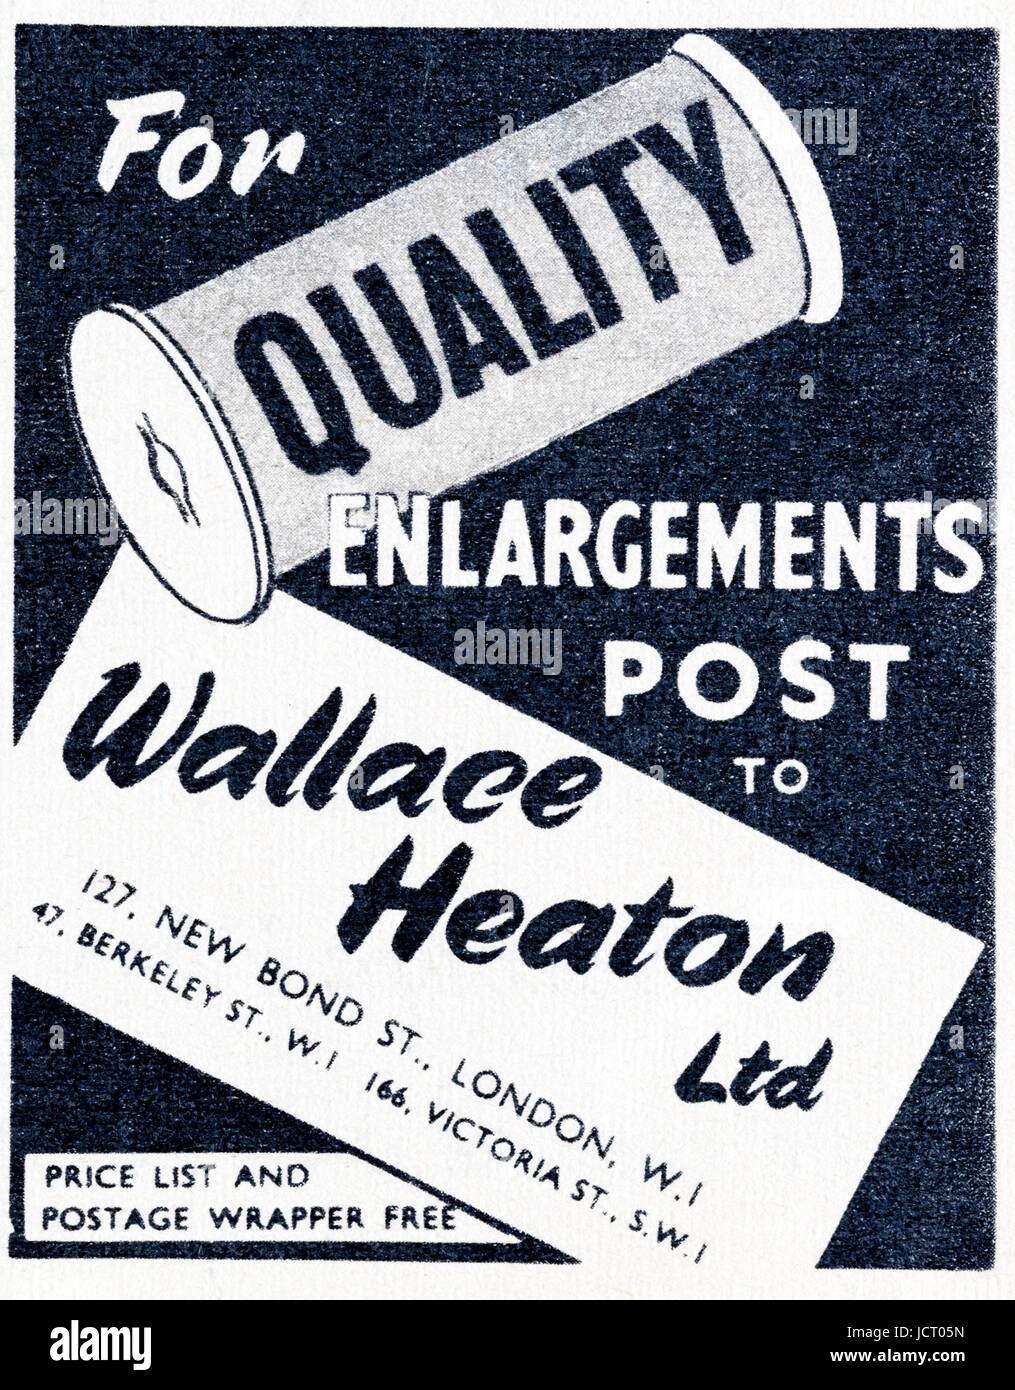 A 1950s magazine advertisement advertising Wallace Heaton photographic processing. Stock Photo